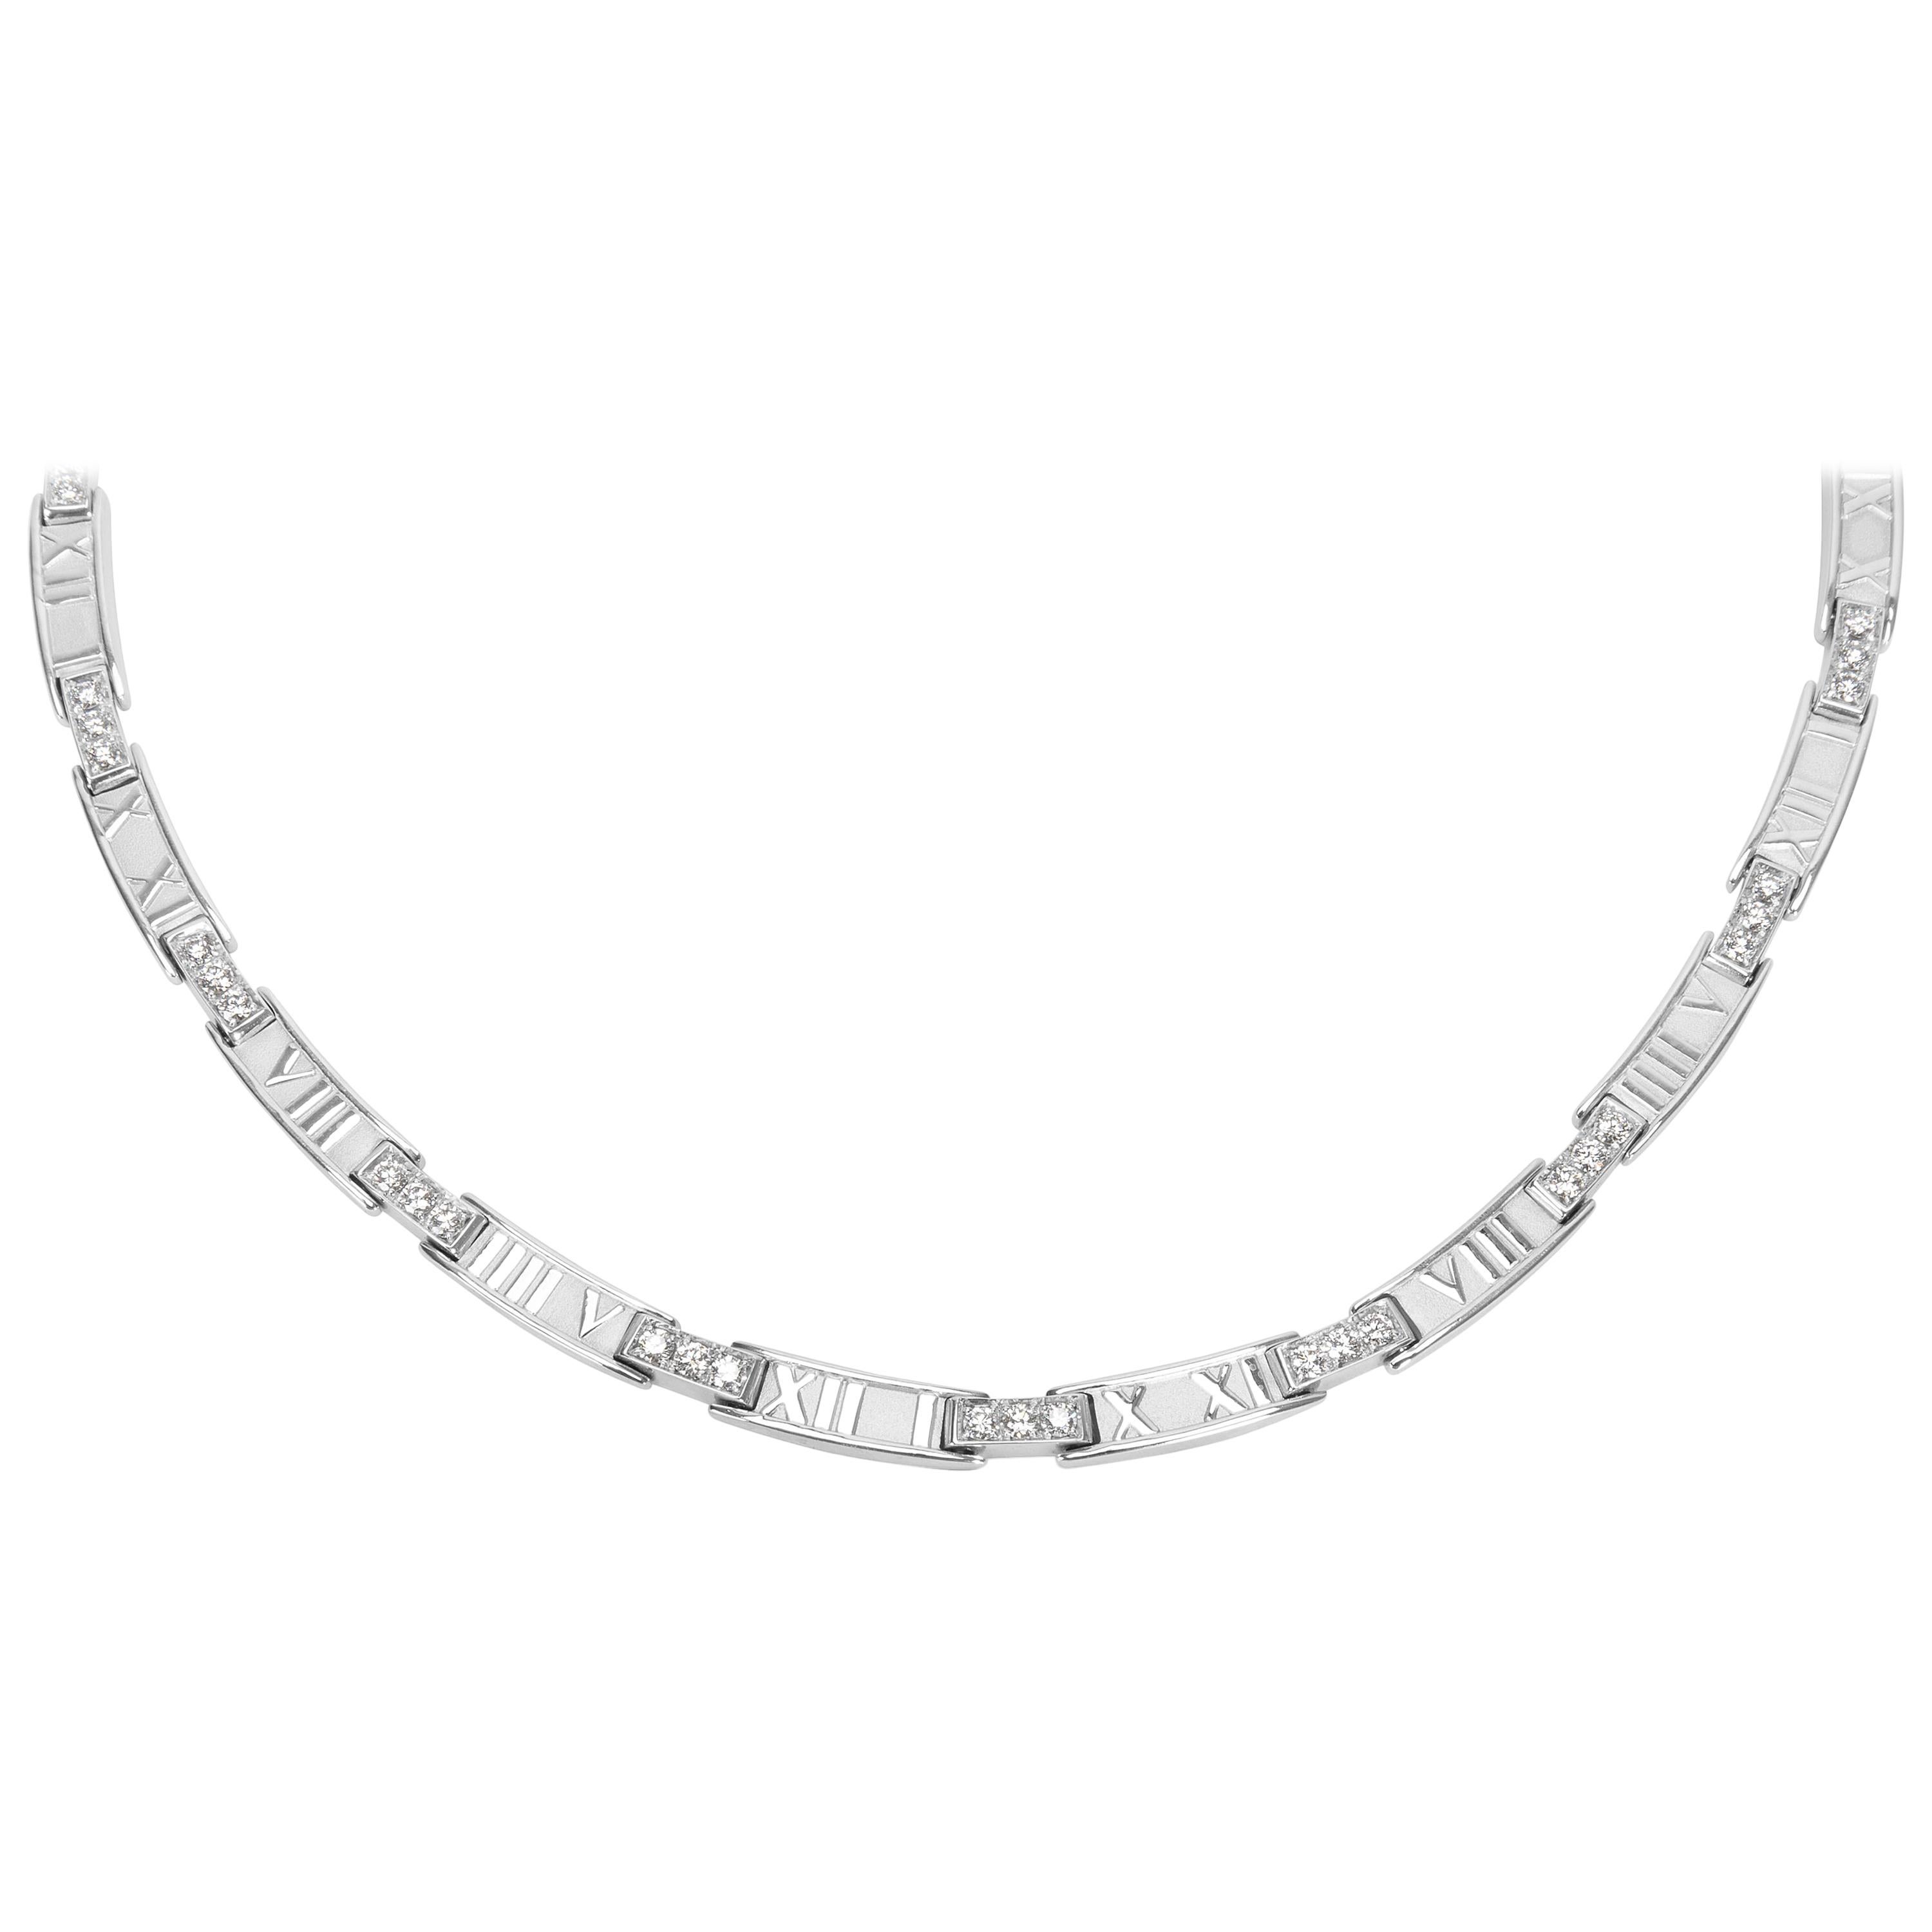 Tiffany & Co. Atlas Collar Diamond Necklace in 18 Karat White Gold 1.50 Carat